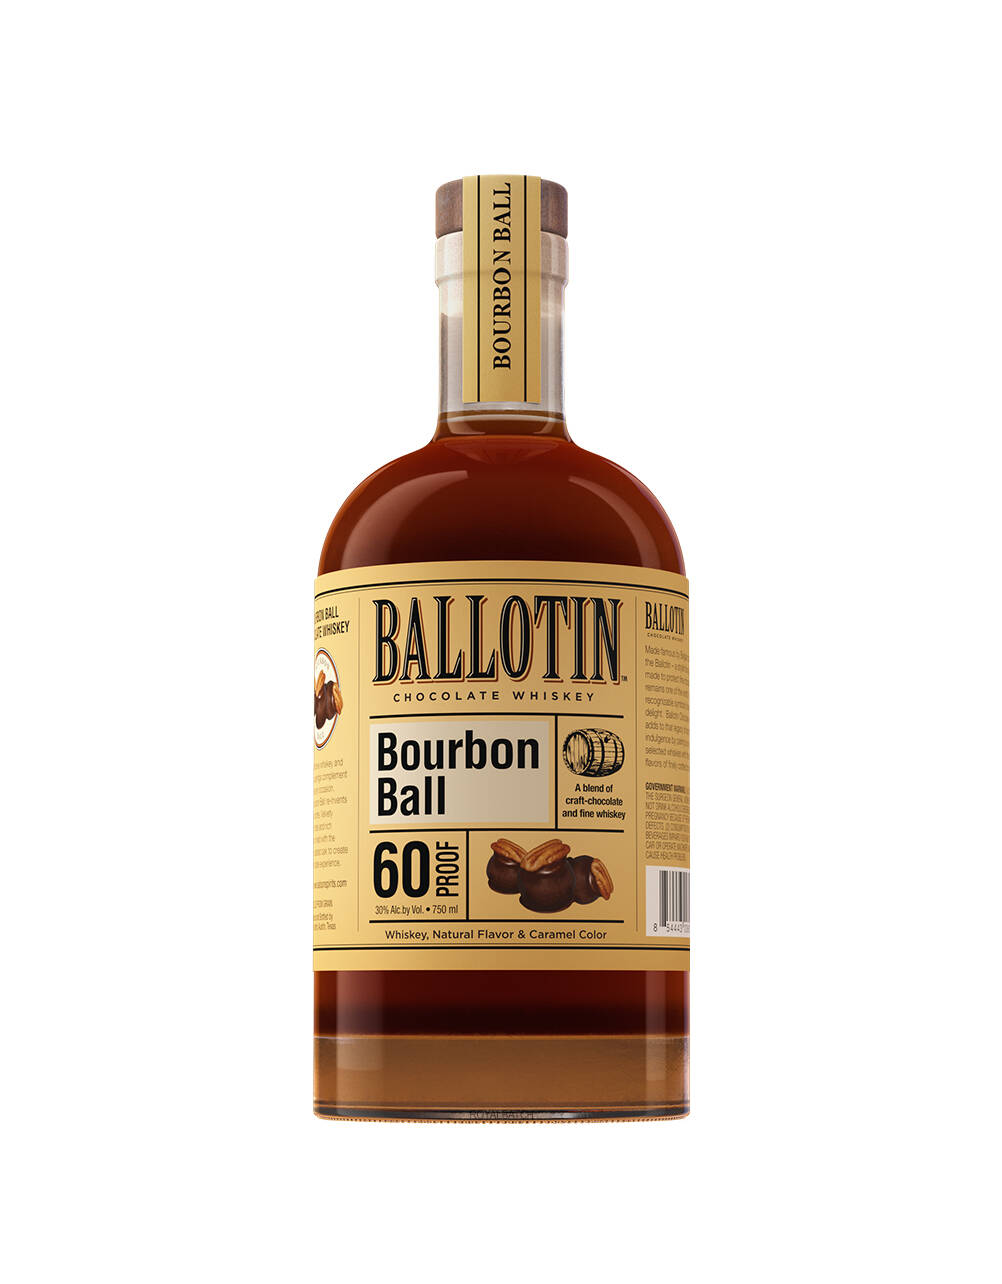 https://royalbatch.com/upload//products/1/ballotin-bourbon-ball-chocolate-flavored-whiskey_RoyalBatch_A2Ehmz32gZ0T.jpg